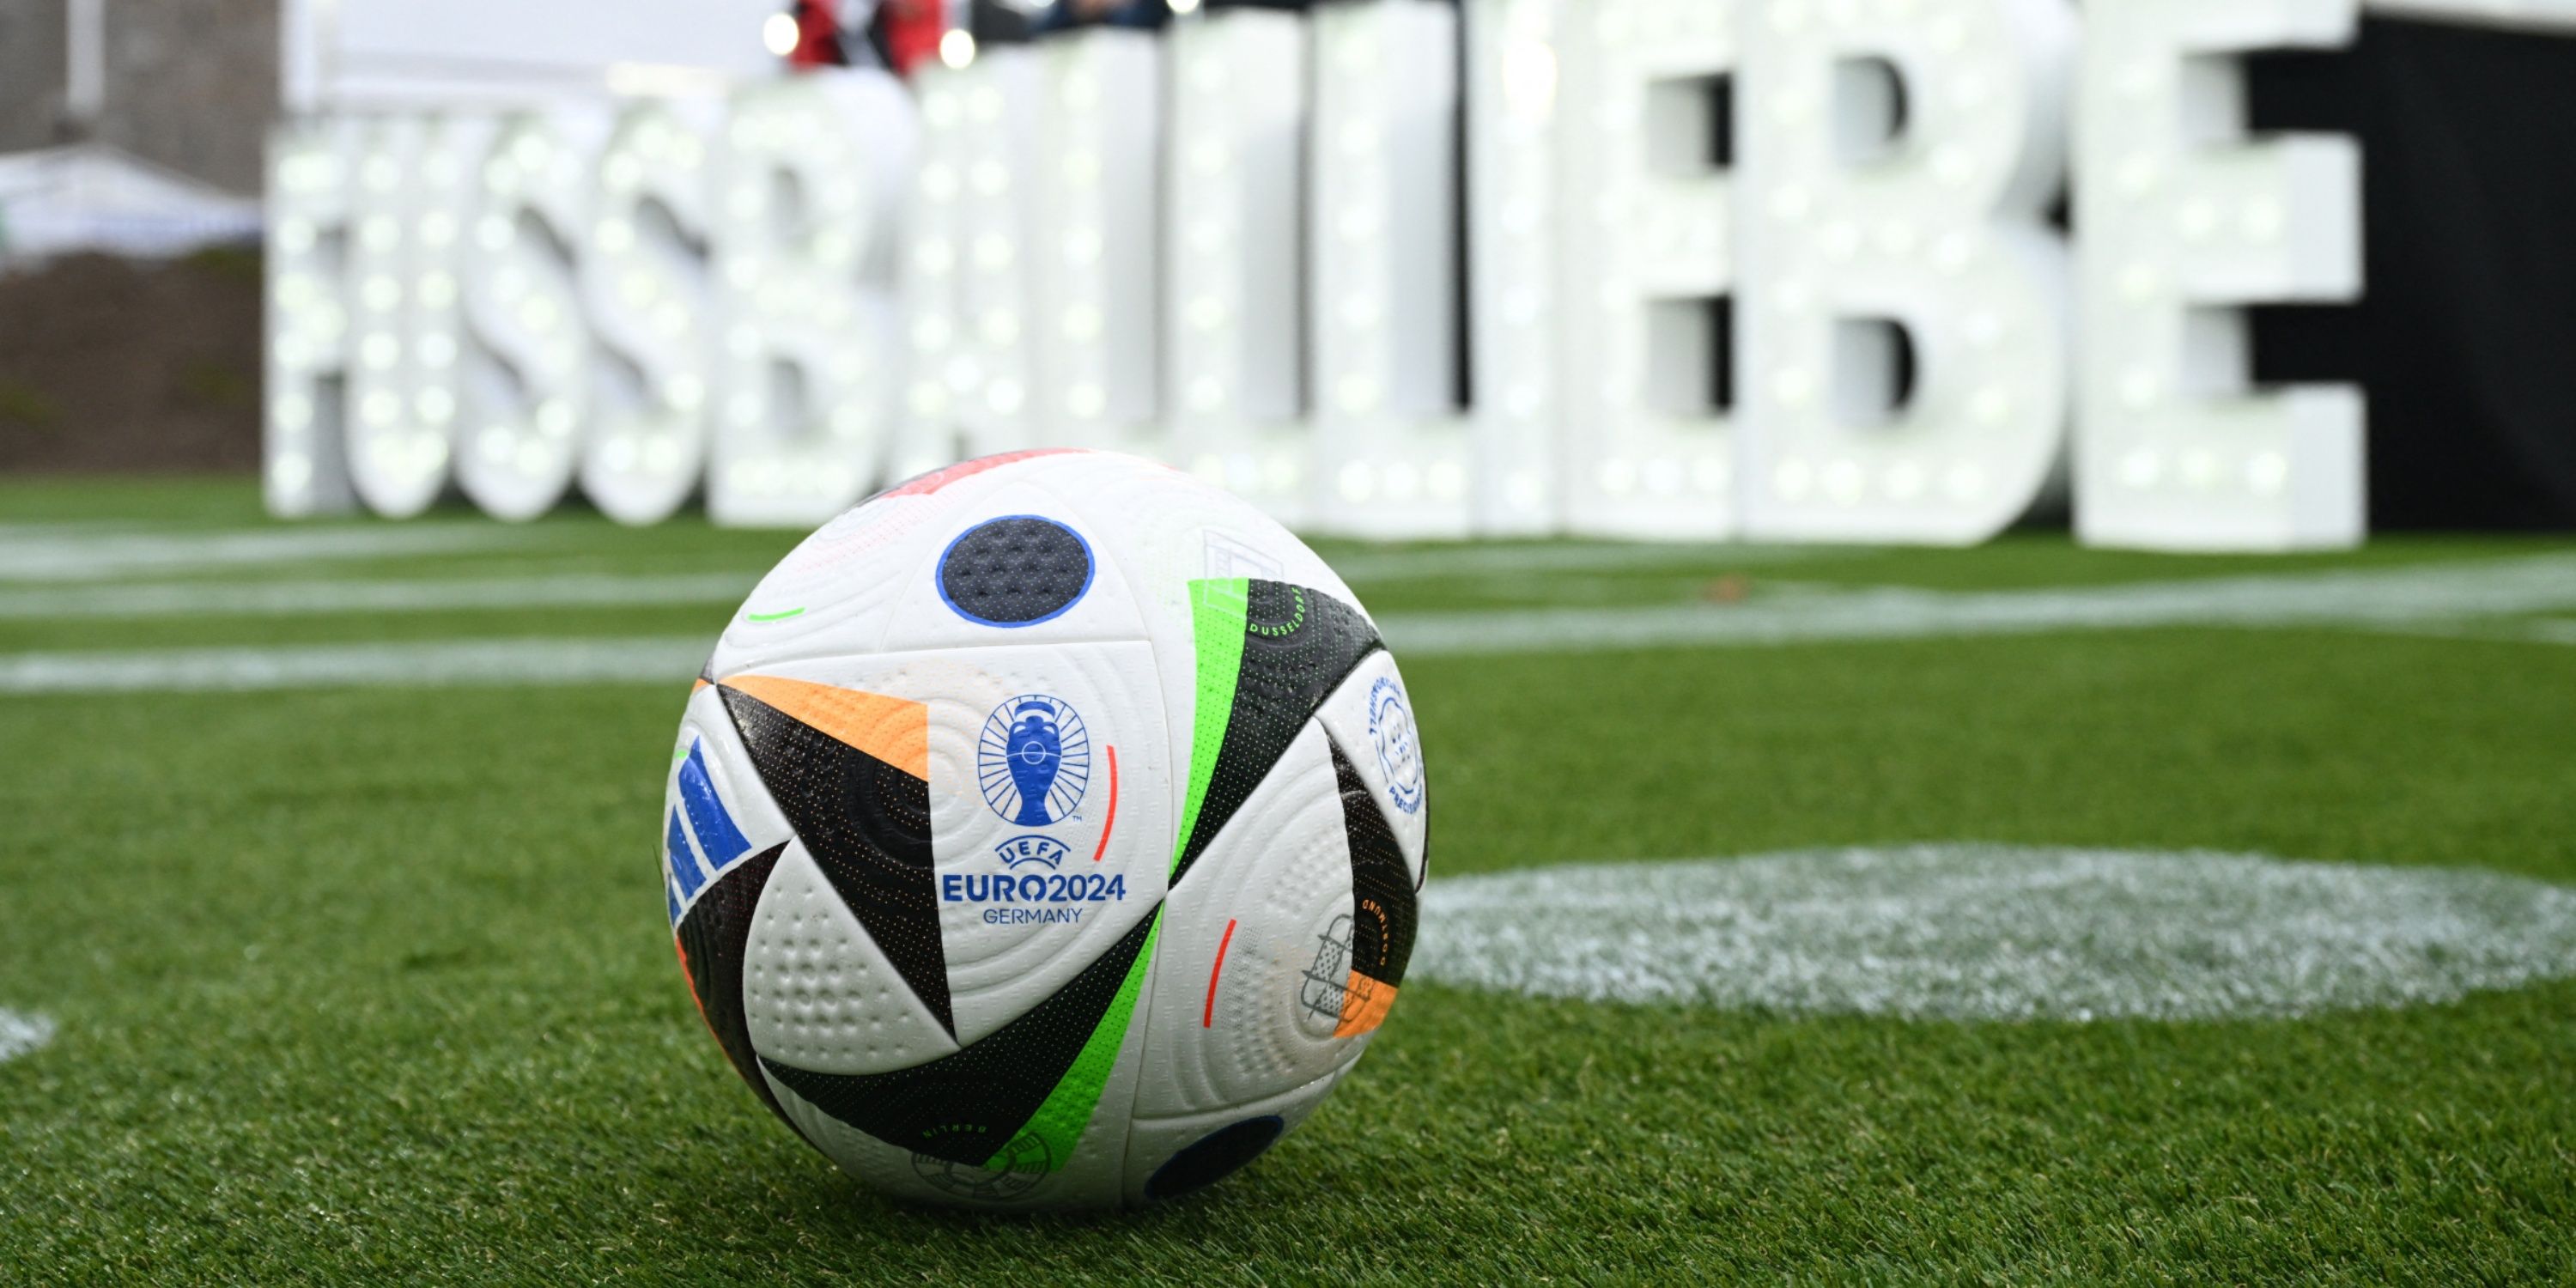 The official Euro 2024 match ball.